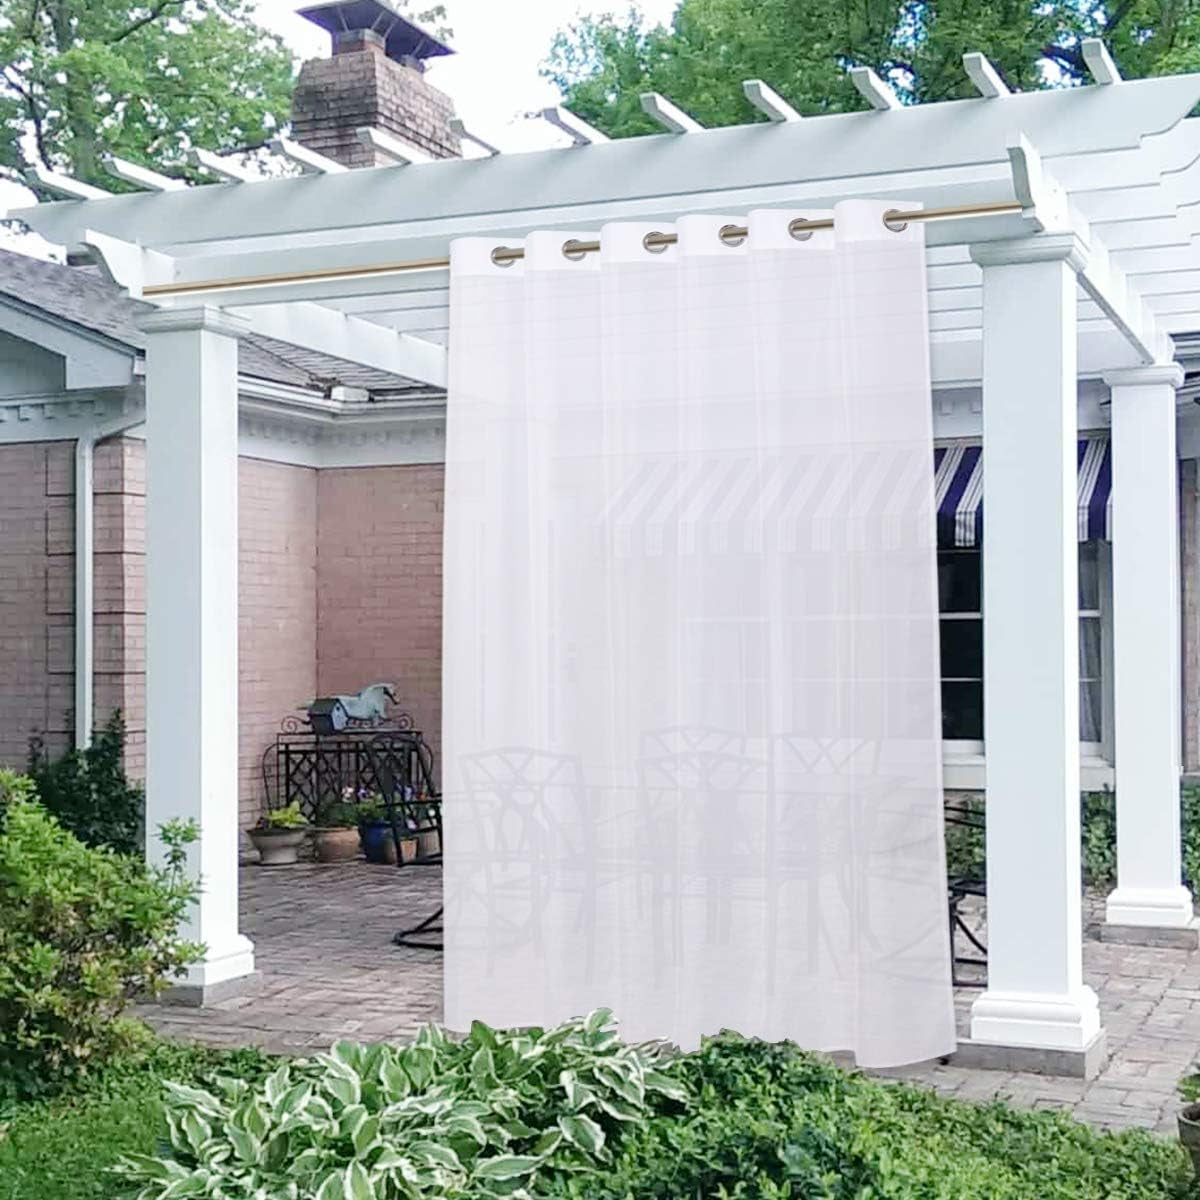 NICETOWN Exterior Waterproof Curtain for Patio, Voile Sheer Breathable Texture Rustproof Steel Grommet Outdoor Indoor Living Divider for Porch/Yard/Sliding Glass Door, W84 X L95, 1 Panel, White  NICETOWN   